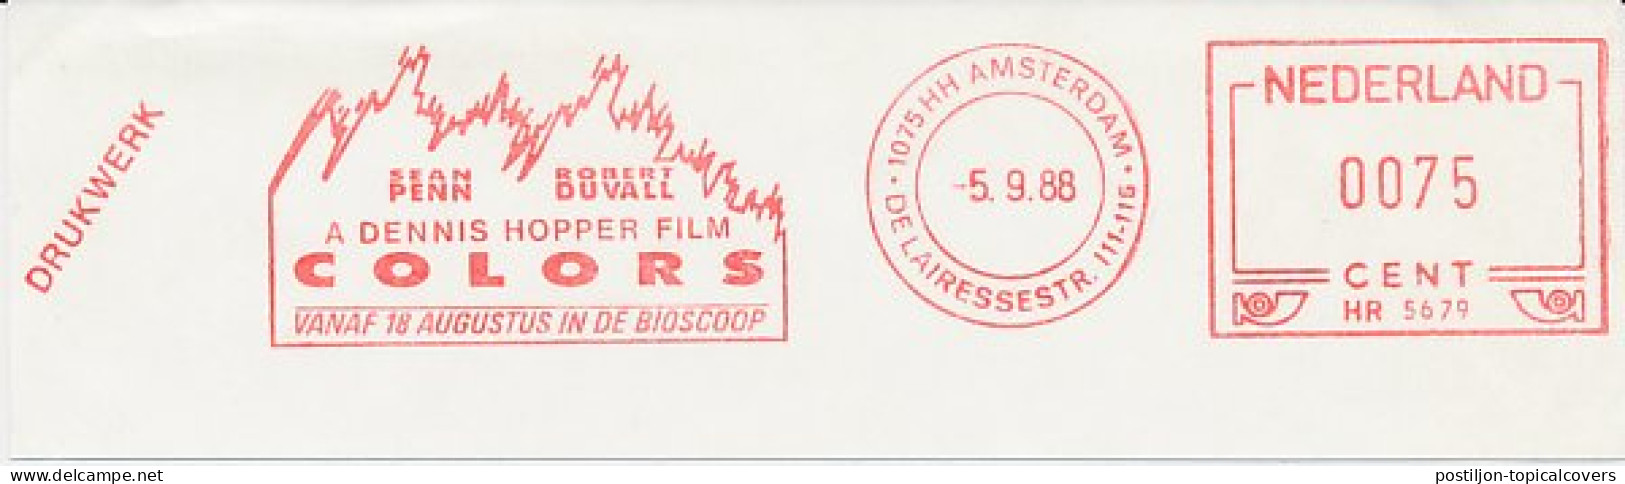 Meter Cut Netherlands 1988 Colors - Movie - Police - Kino